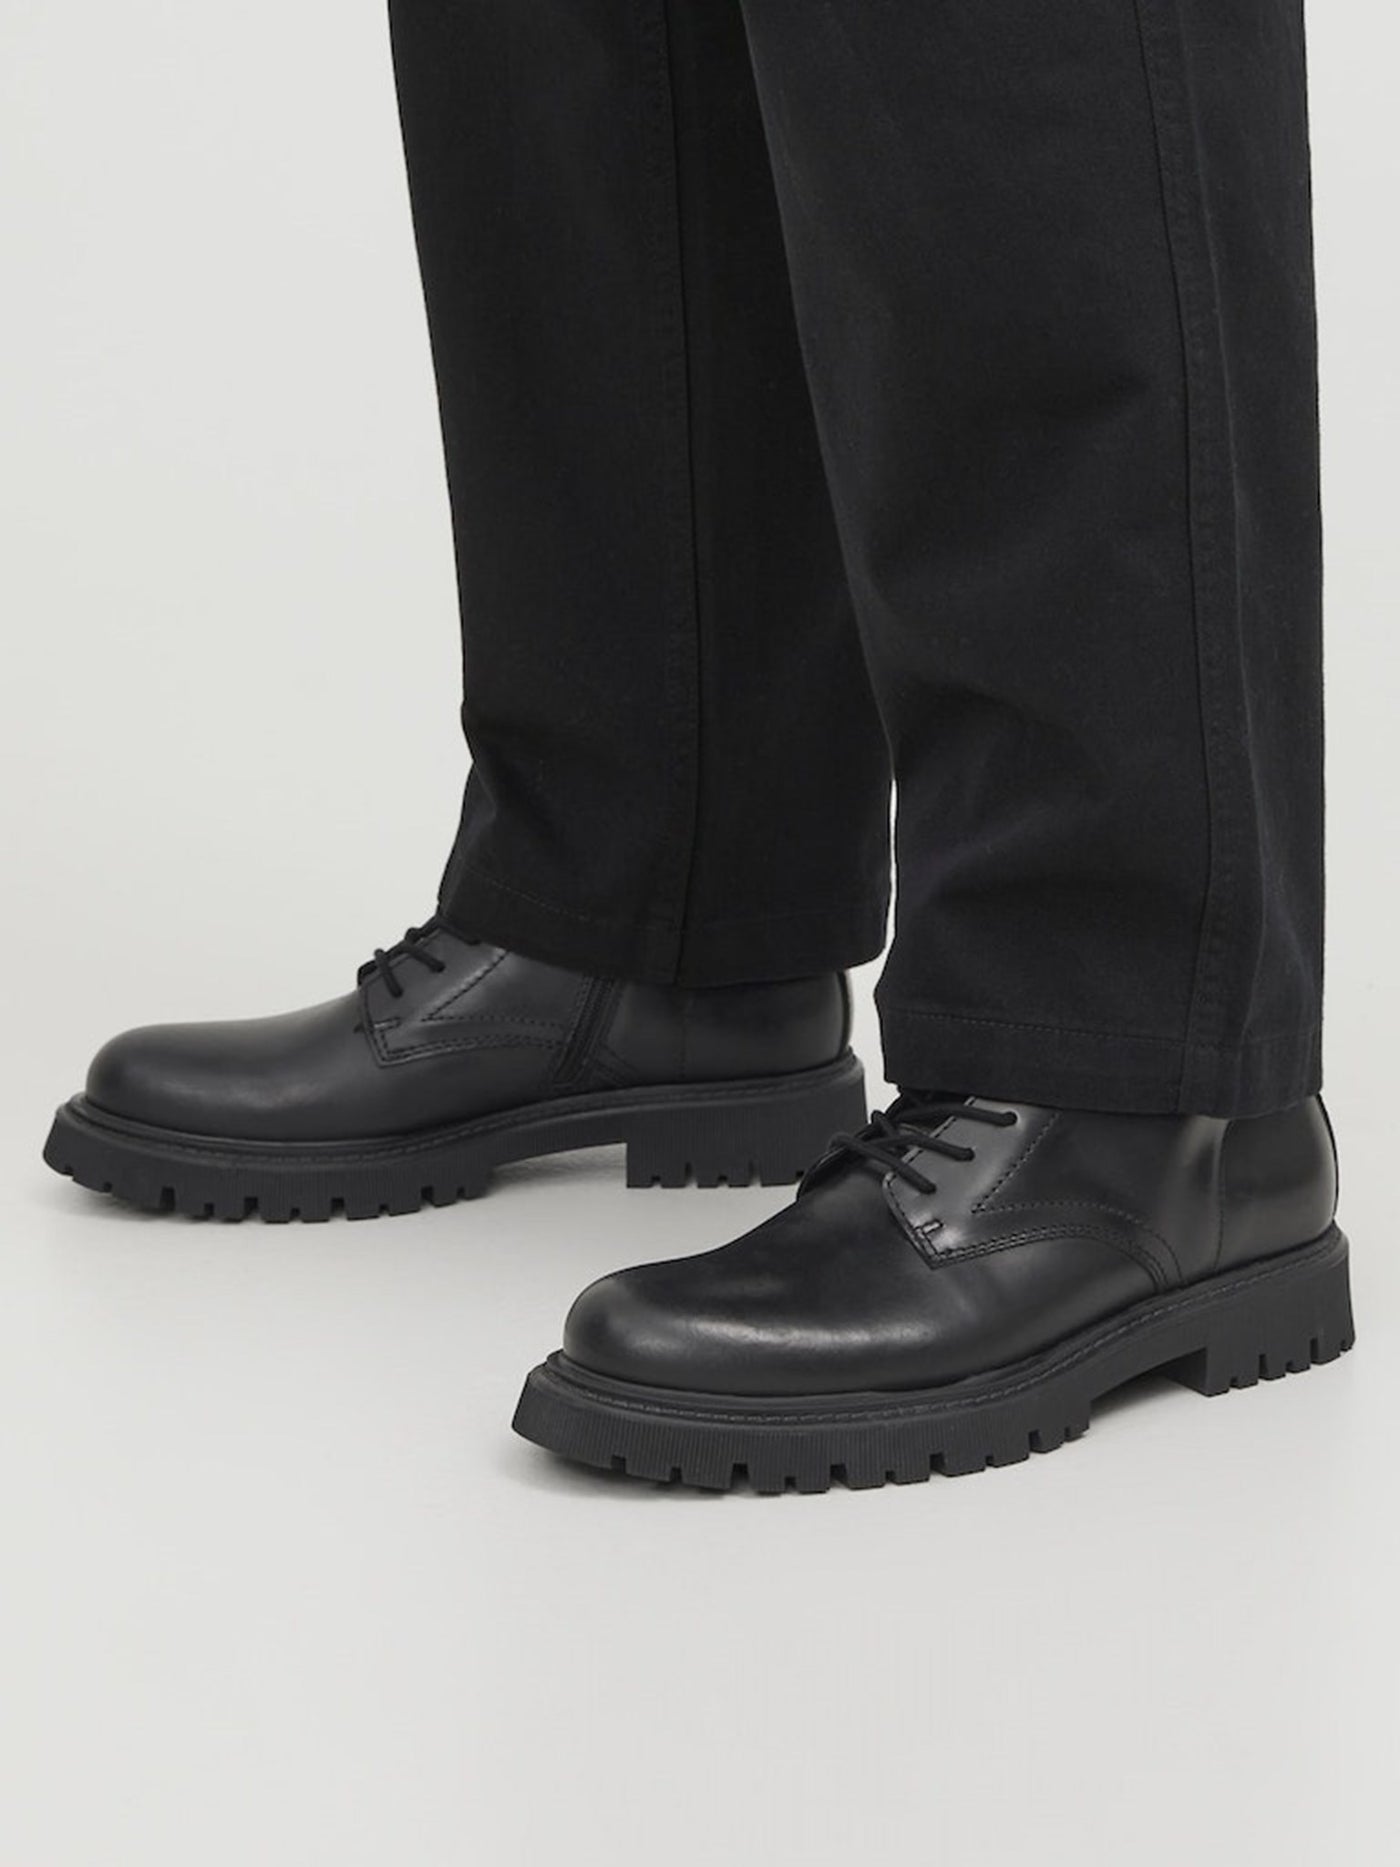 Dixon Leather Boots - Anthracite - Jack & Jones - Sort 3